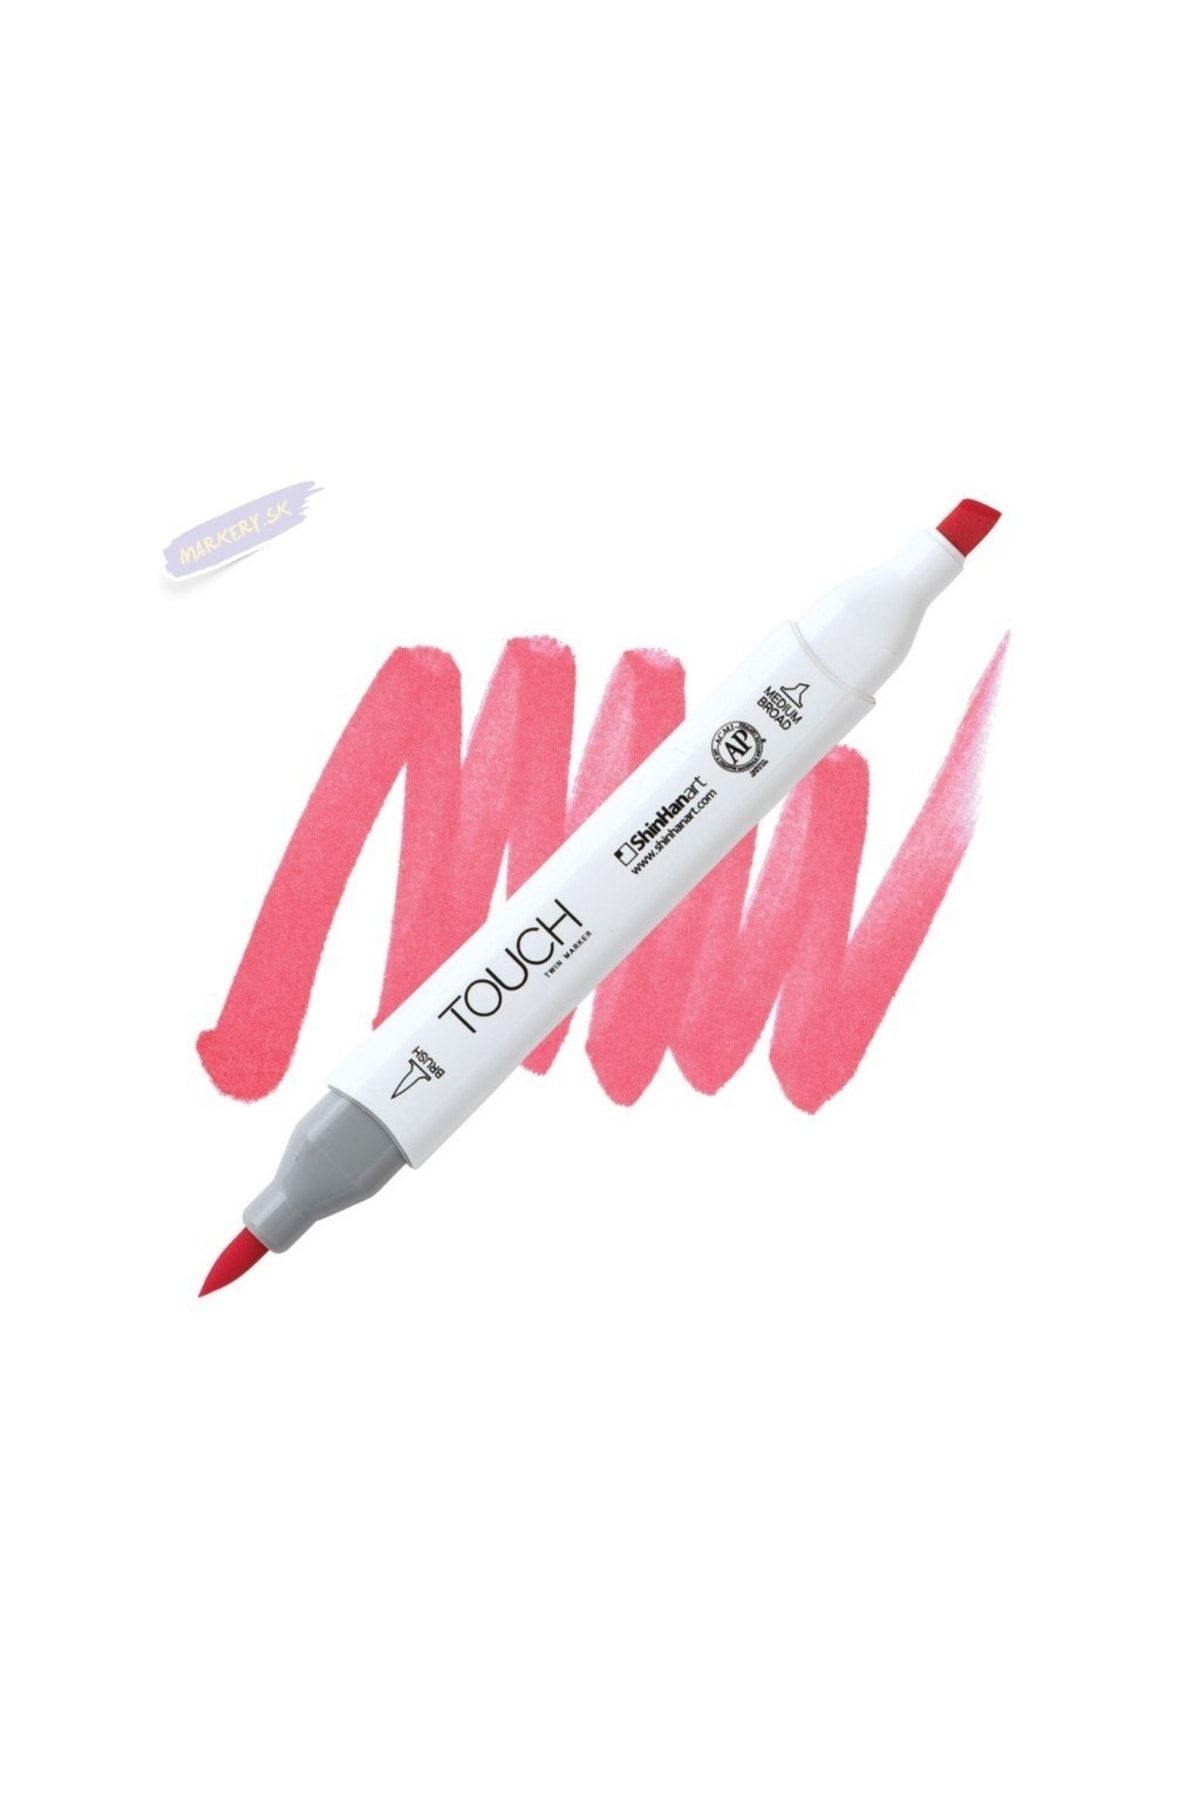 Shinhan Art Touch Twın Brush Pen : Çift Taraflı Marker : Rs13 Scarlet